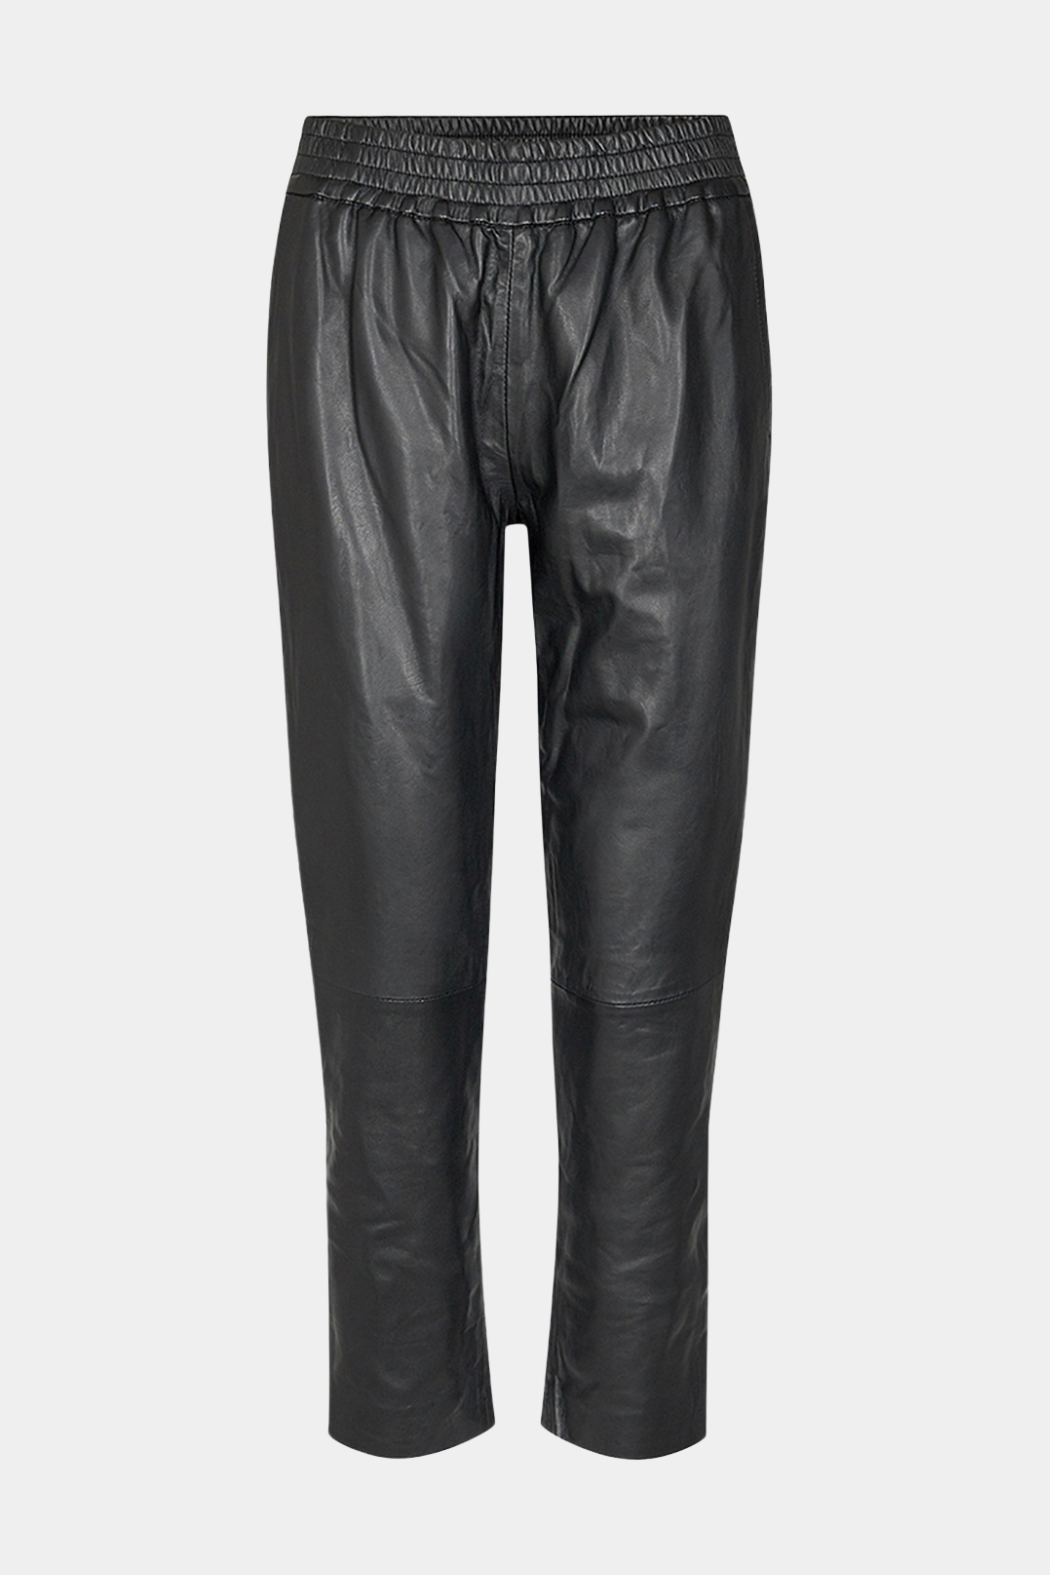 CHOISIE FAUX LEATHER PANTS BLACK – Lolas Couture Collection